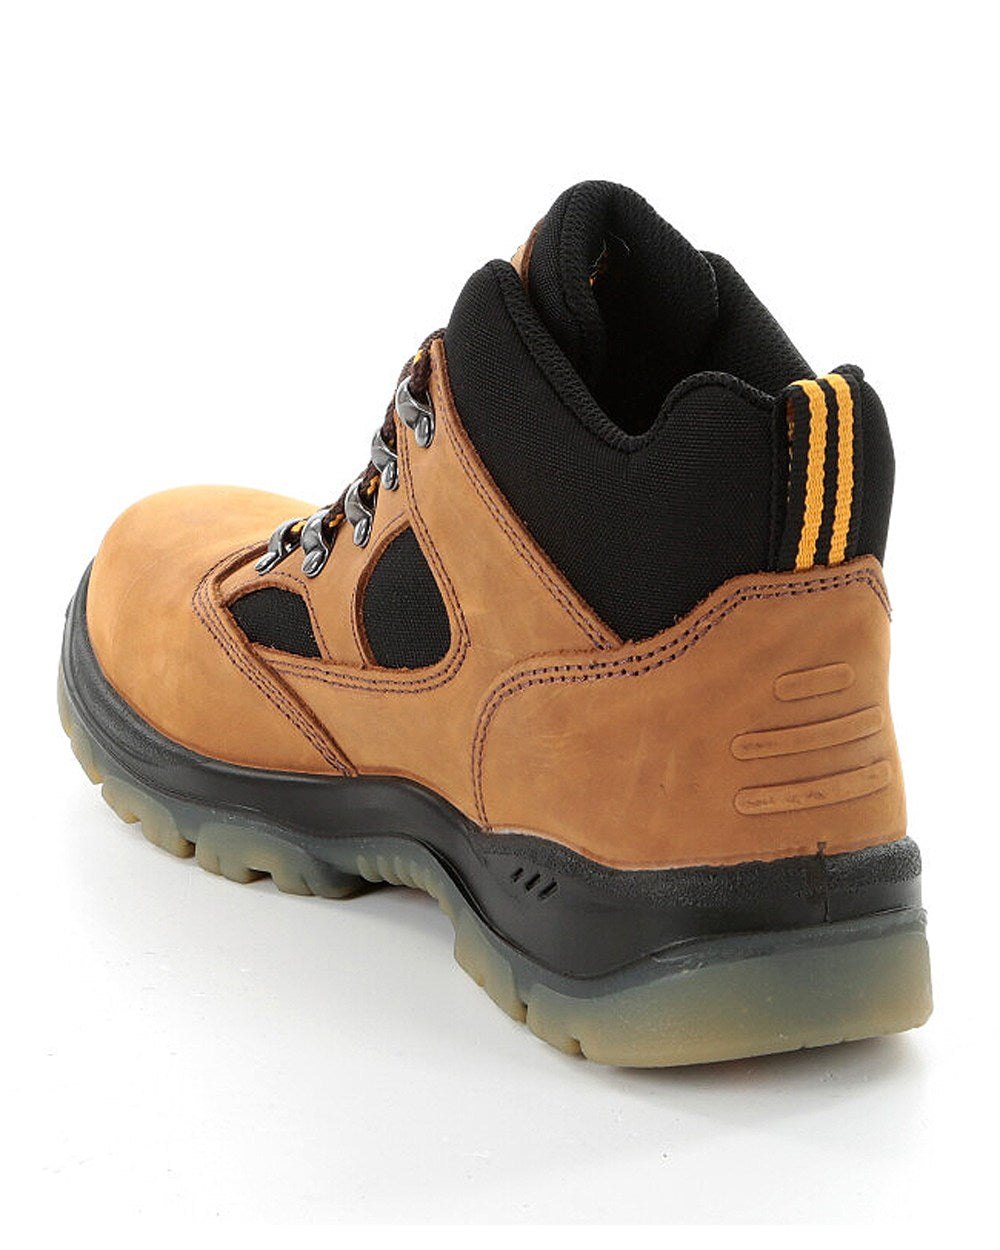 DeWalt Challenger Waterproof Safety Hiker Boots in Brown 